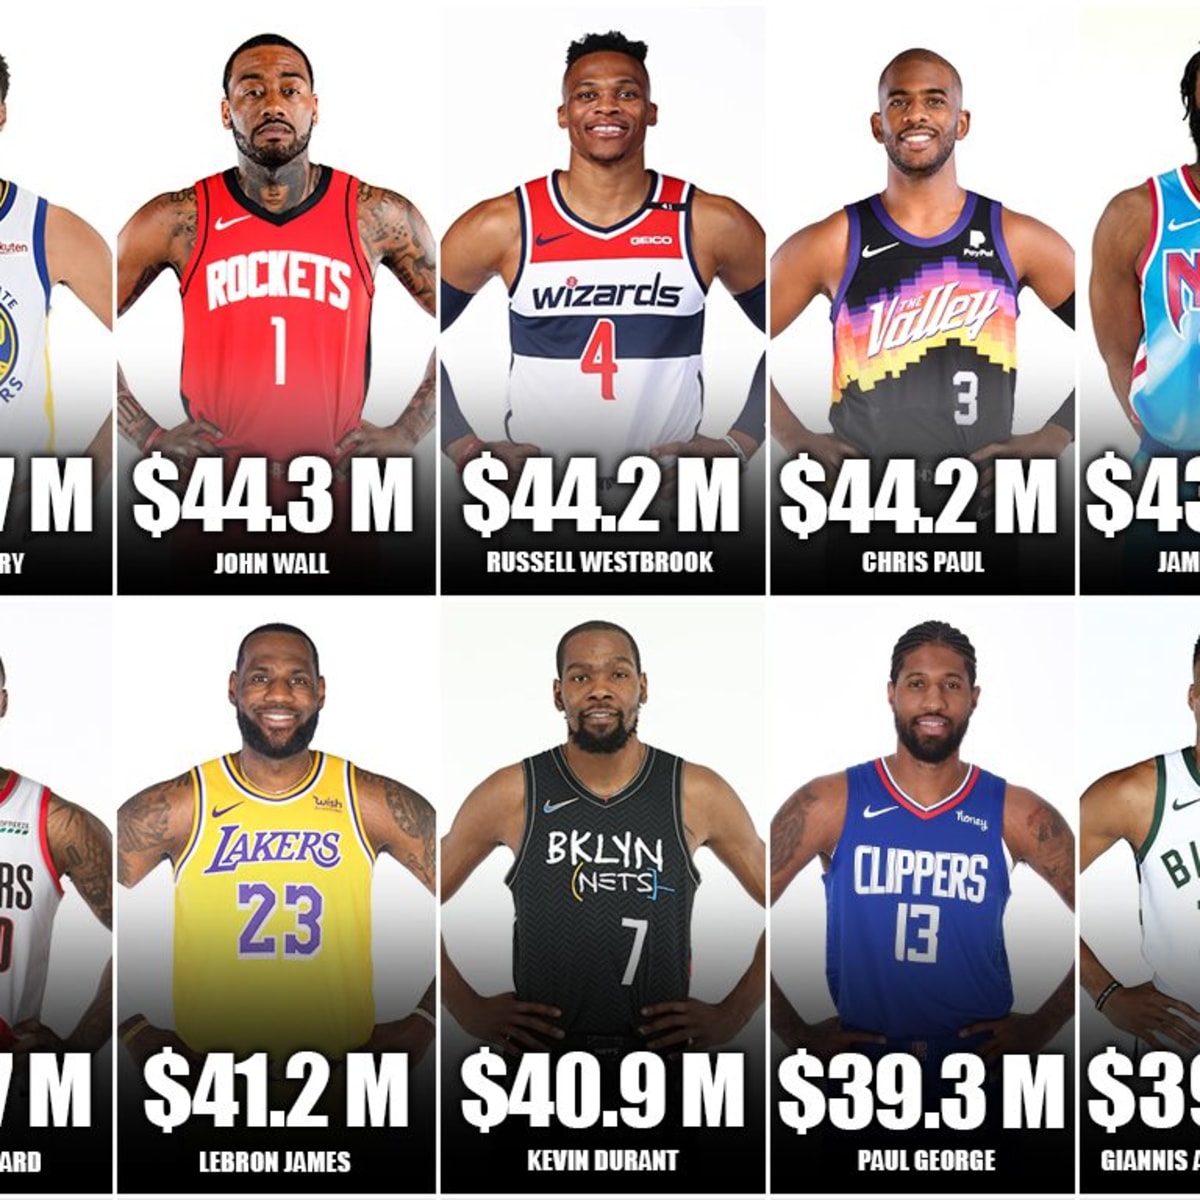 Top 10 NBA players of 2021 